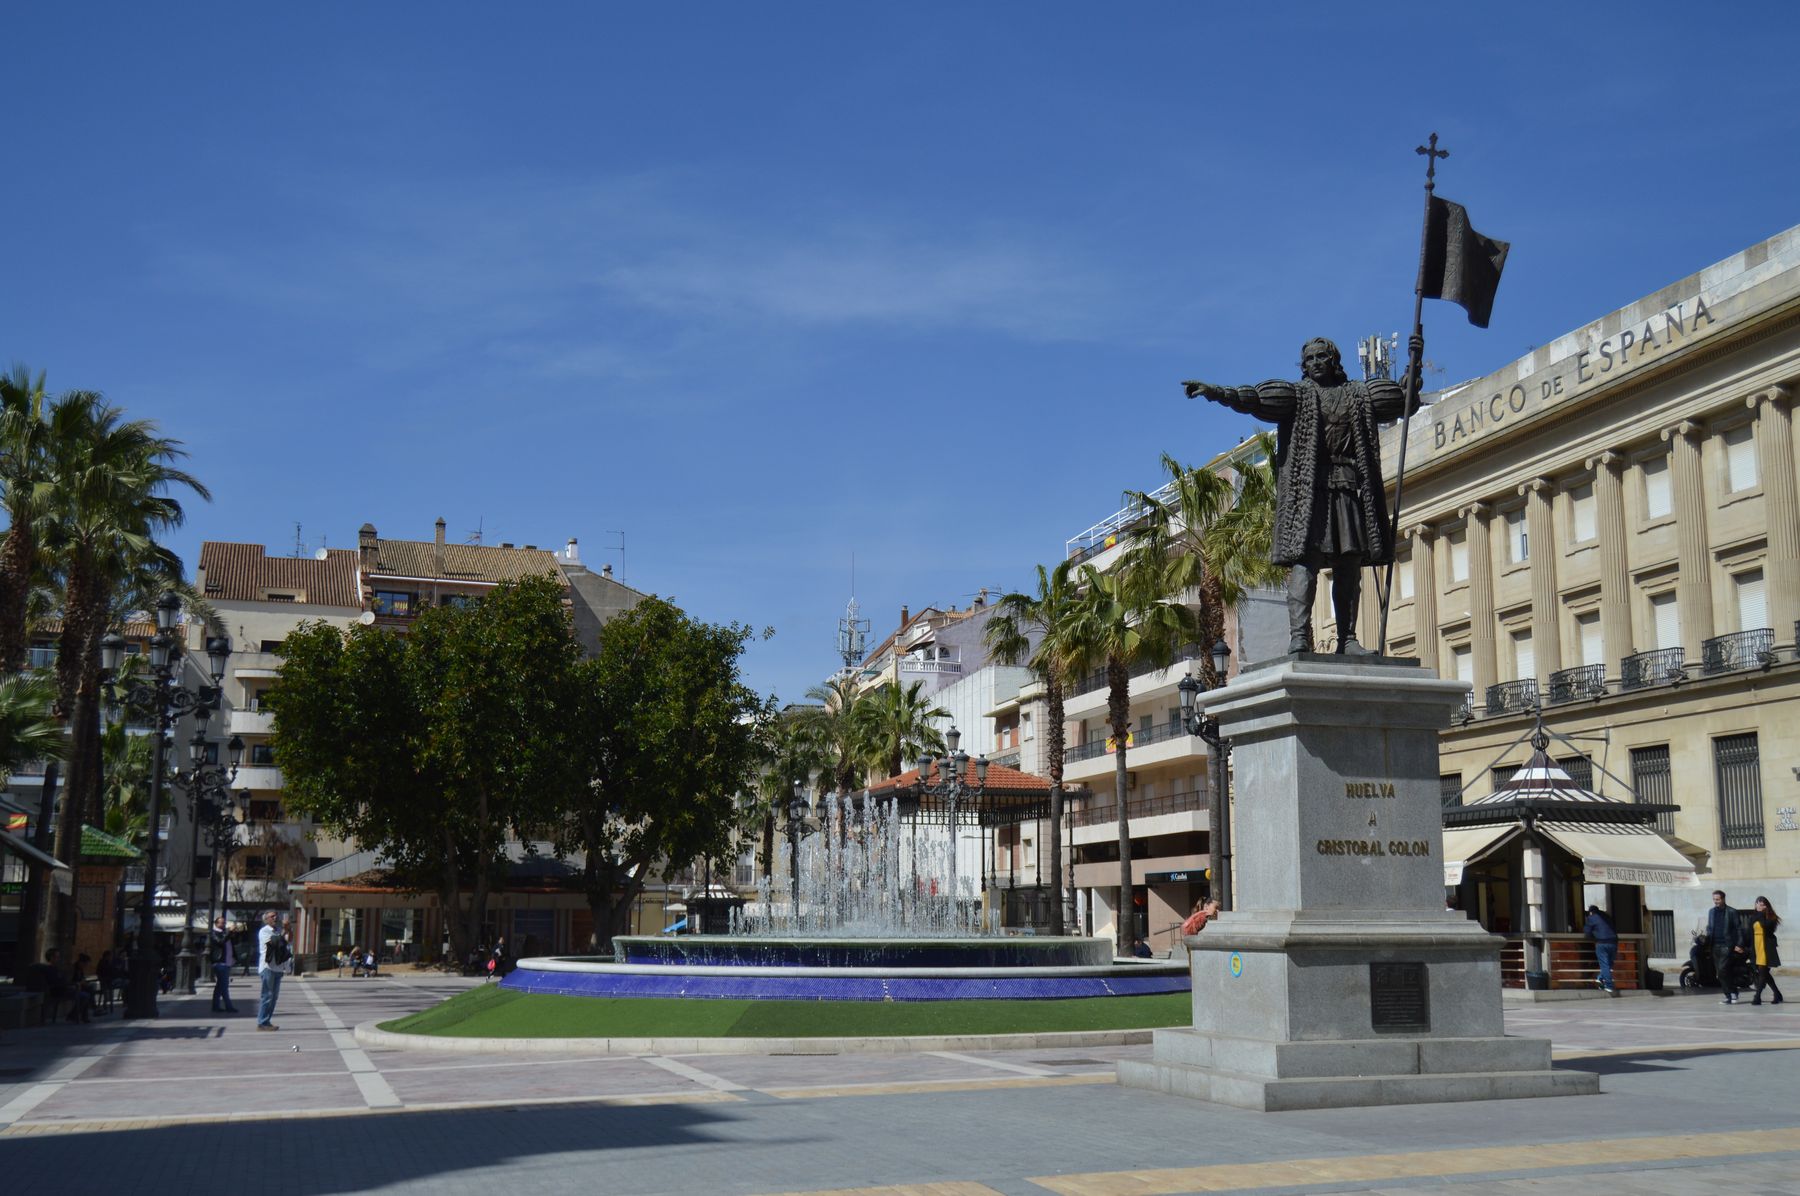 Free Tour Huelva - Huelva Experiences